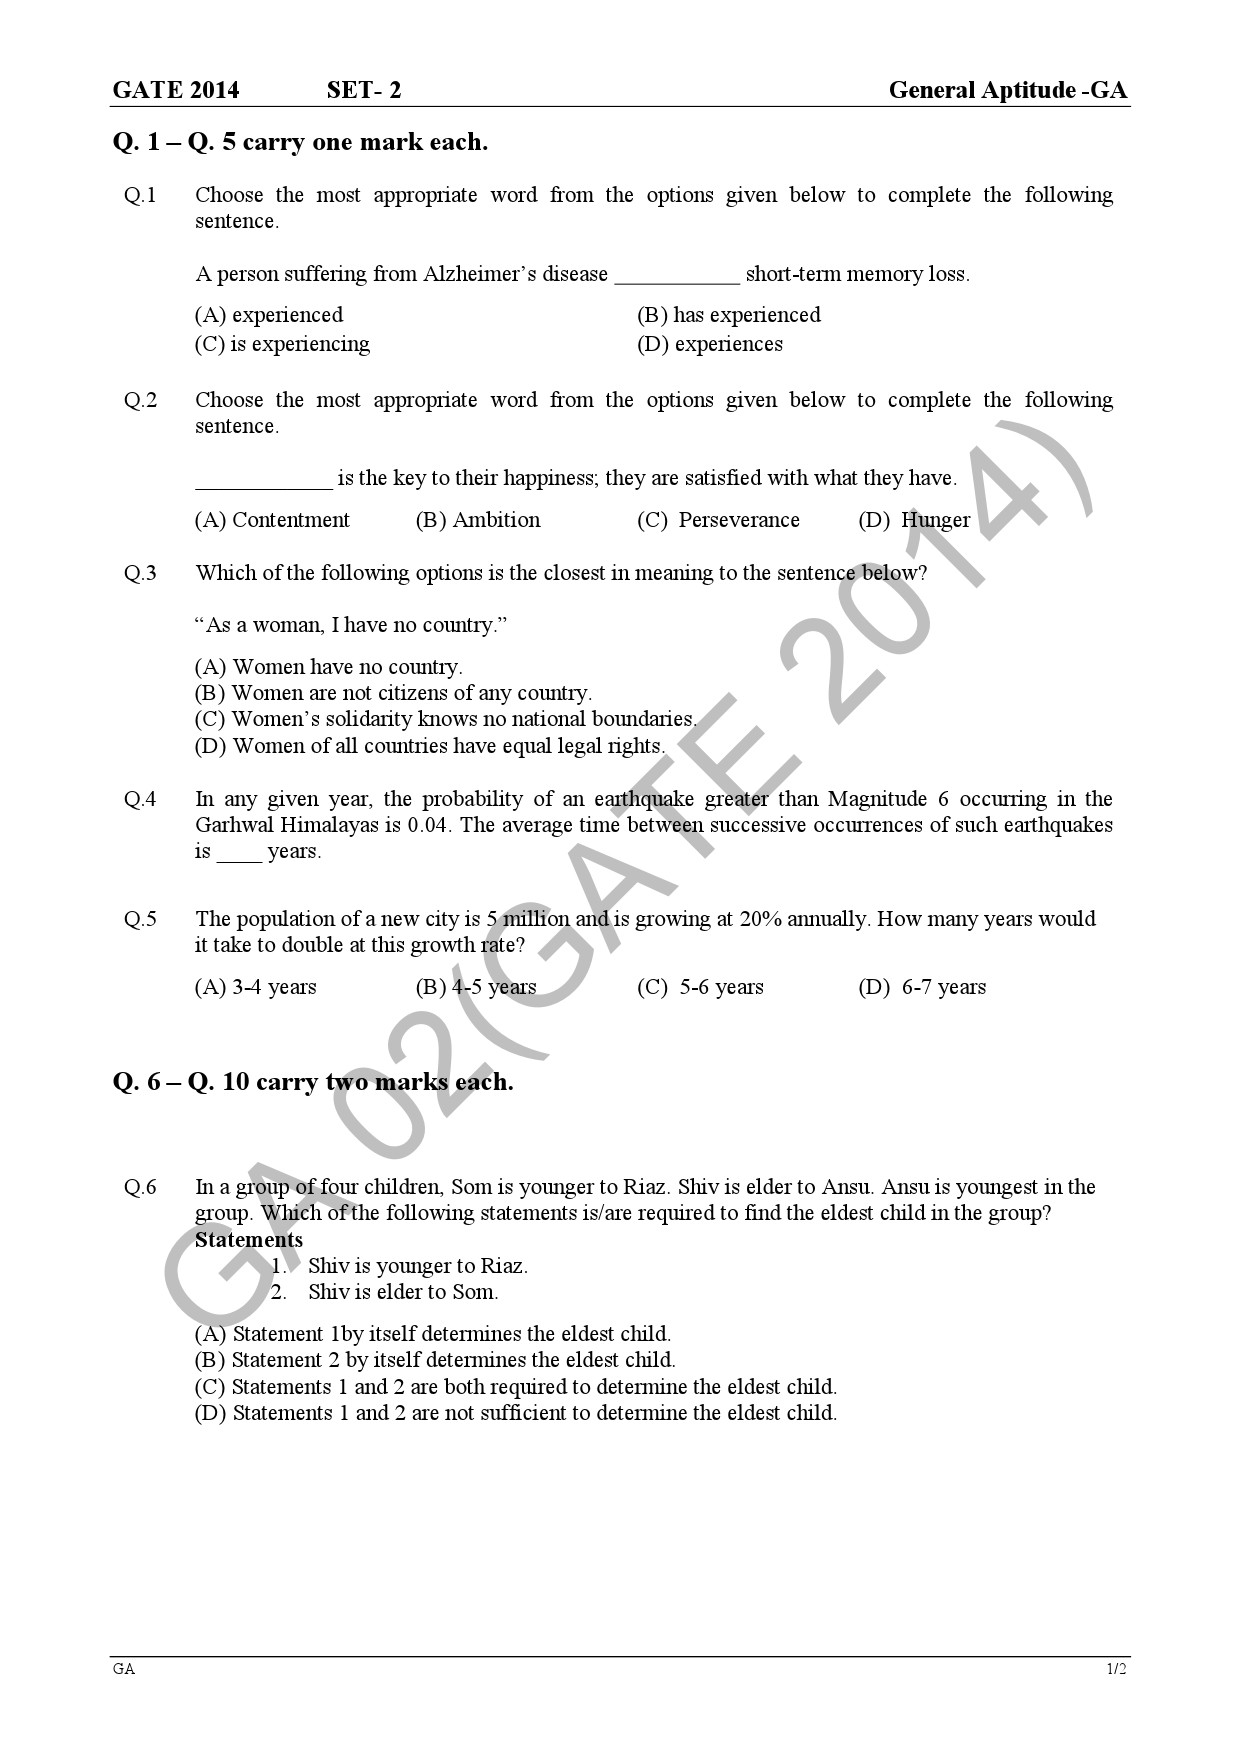 GATE Exam Question Paper 2014 Civil Engineering Set 2 5